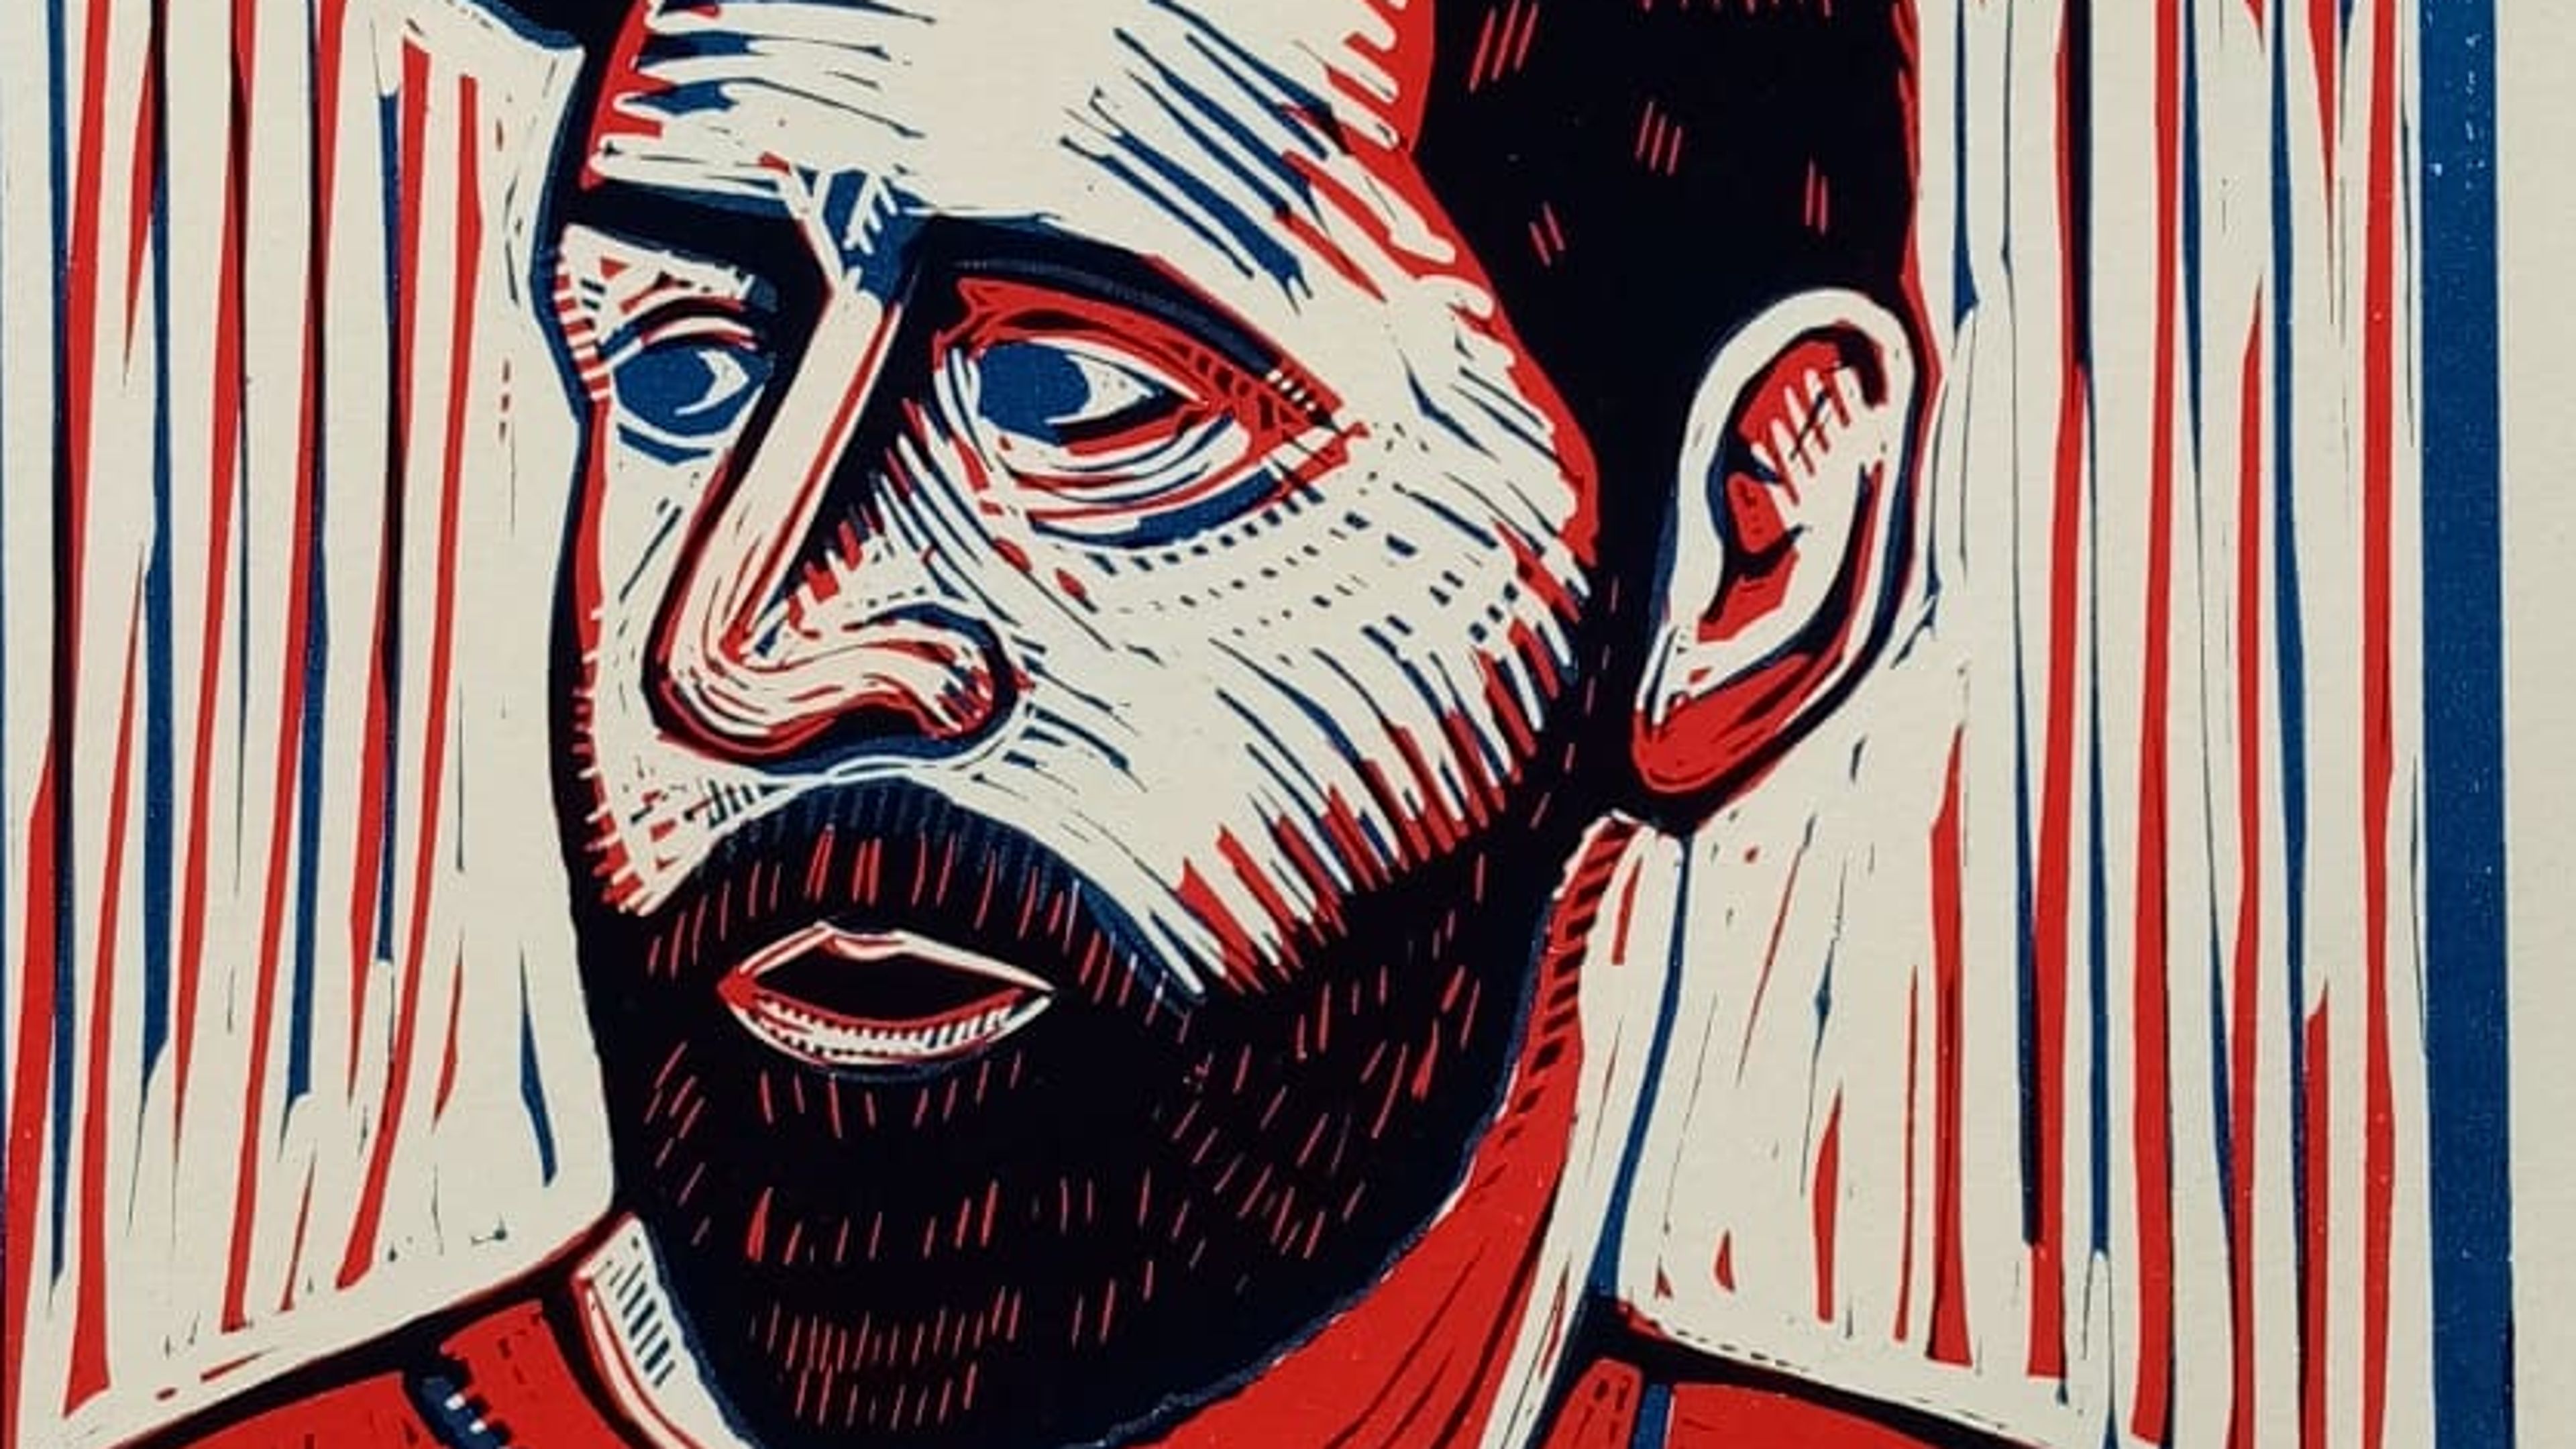 red blue graphic screenprint of male footballer portrait